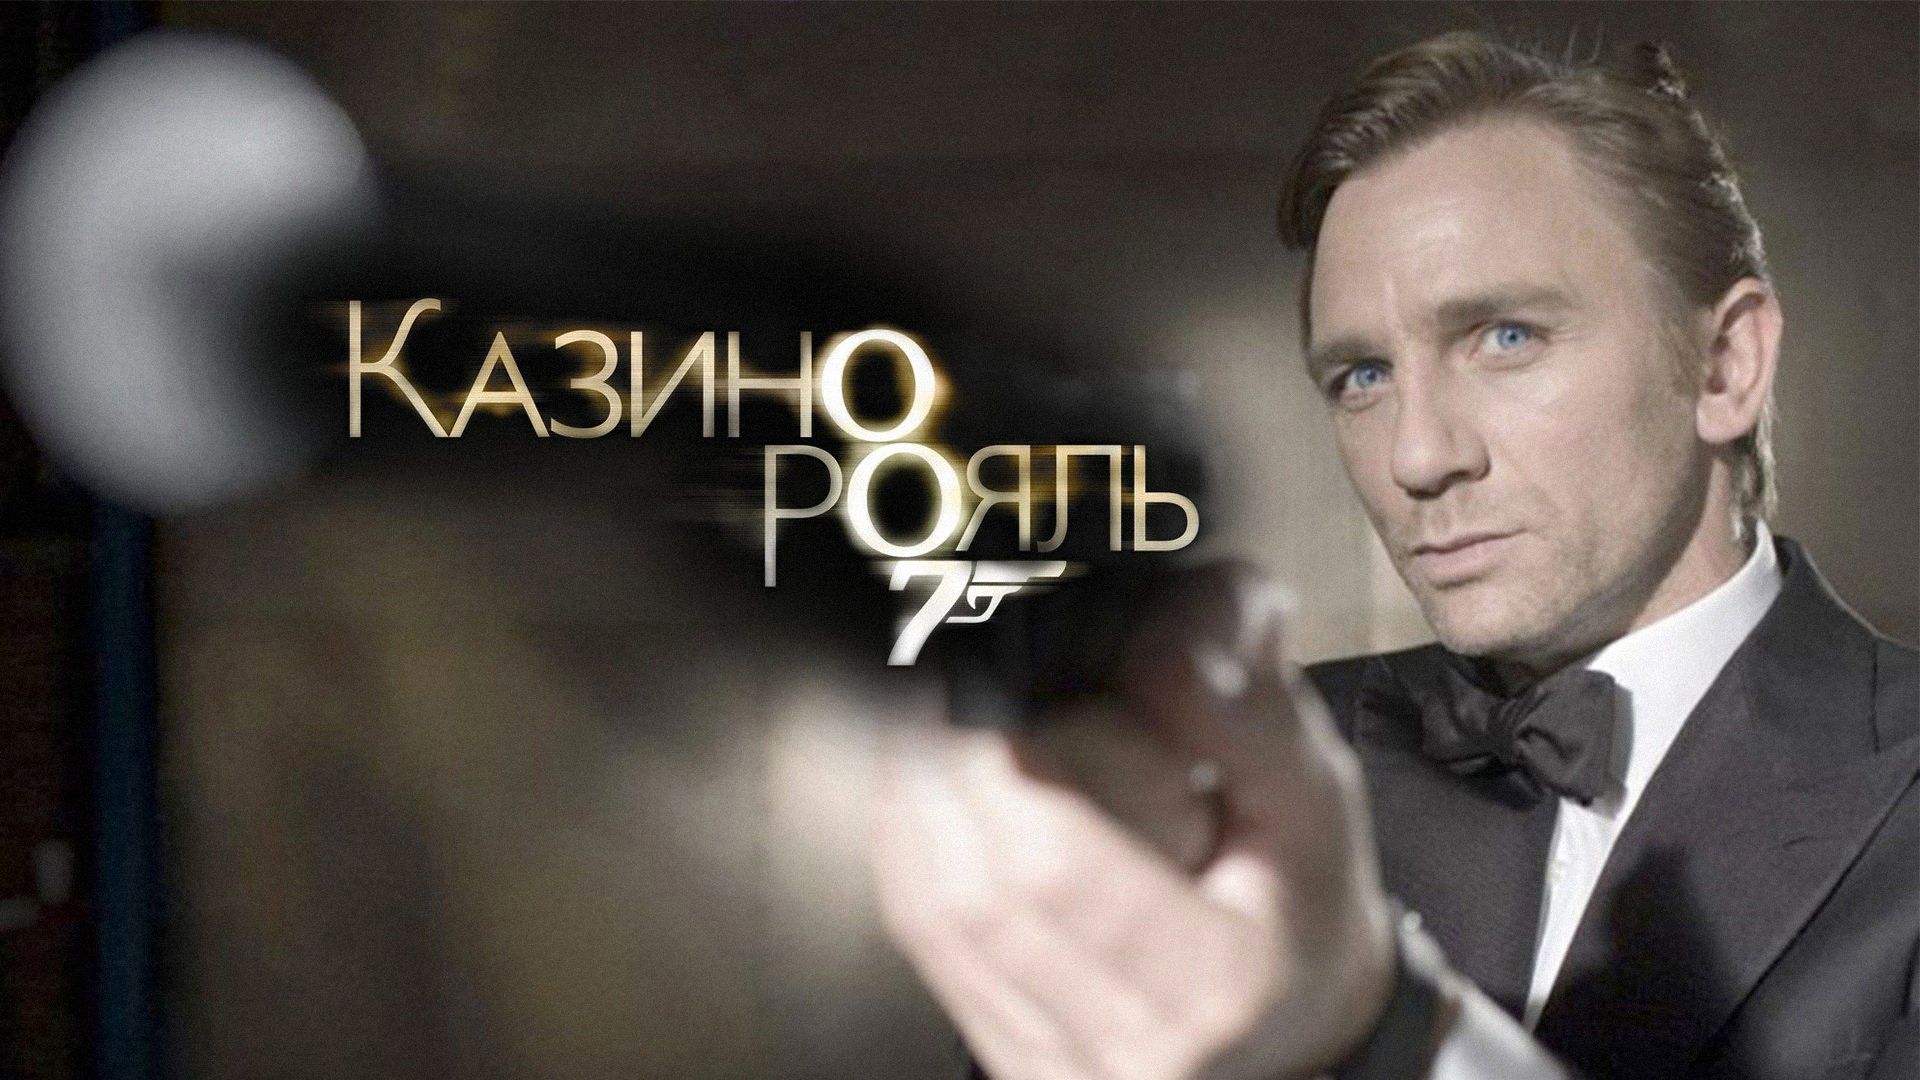 007 казино рояль смотреть онлайн hd 1080